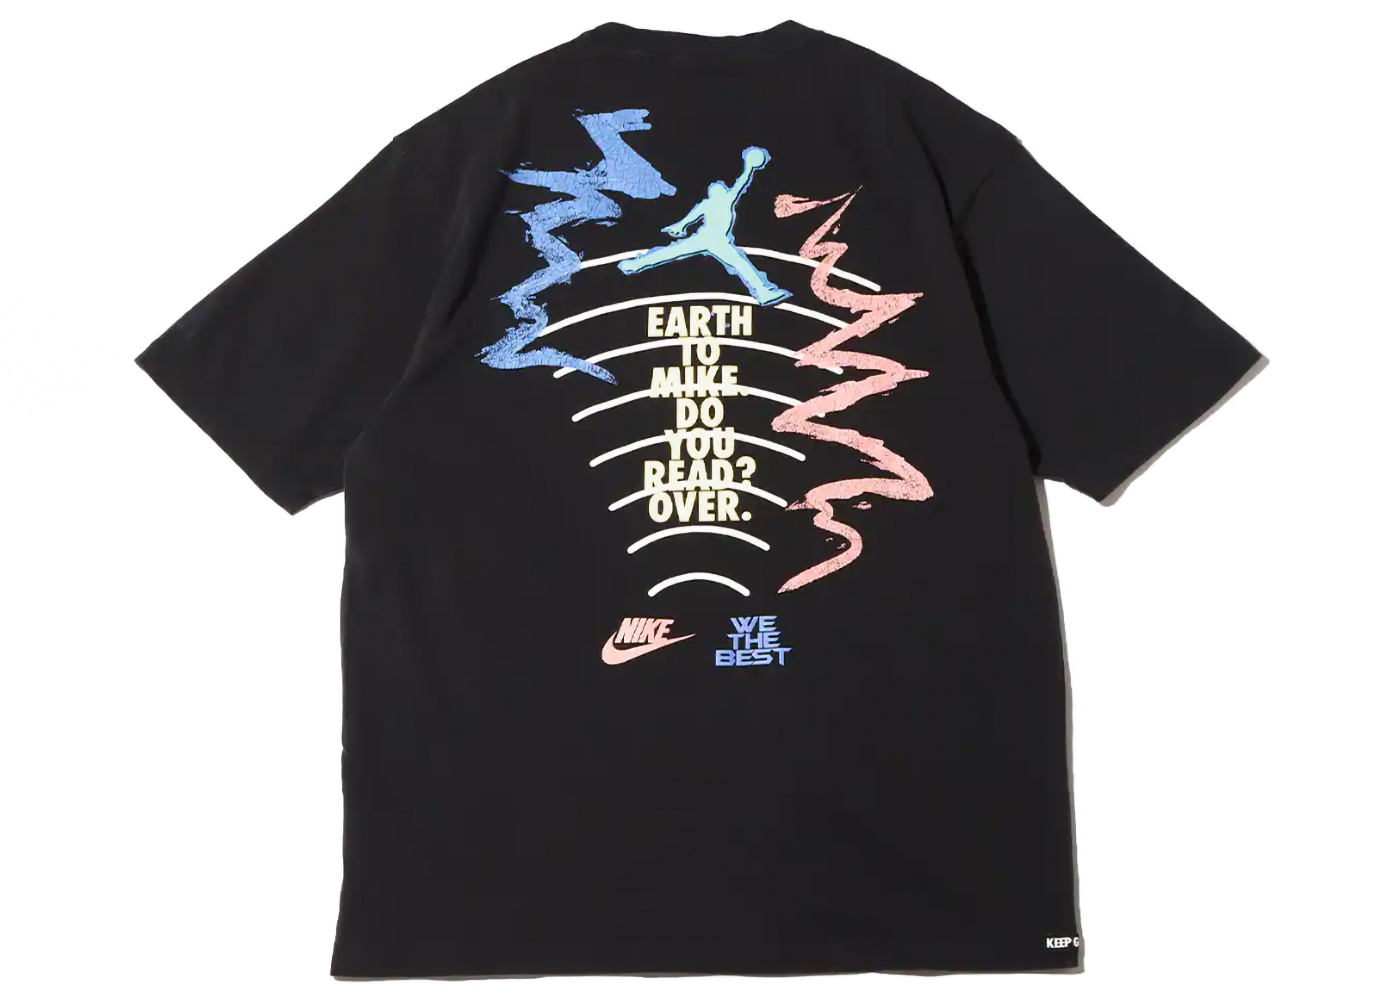 Nike Kobe Mamba Mentality T-shirt (Asia Sizing) Black Men's - FW23